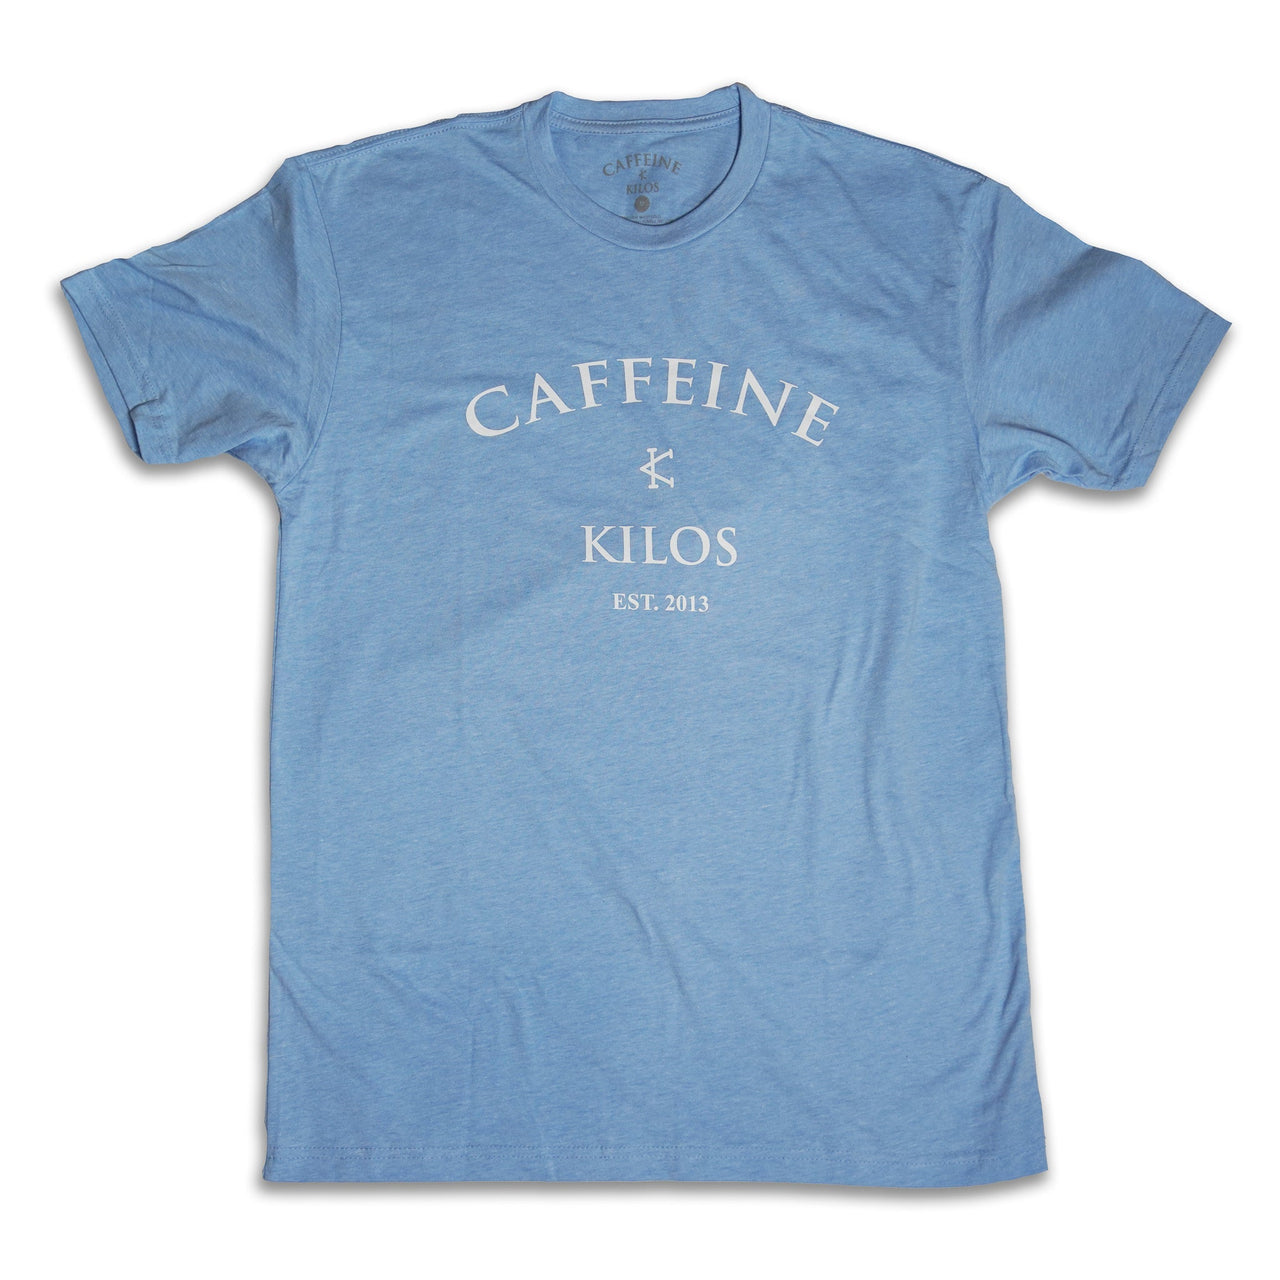 Caffeine and Kilos Inc apparel XS Arch Logo Collegiate Blue Tee